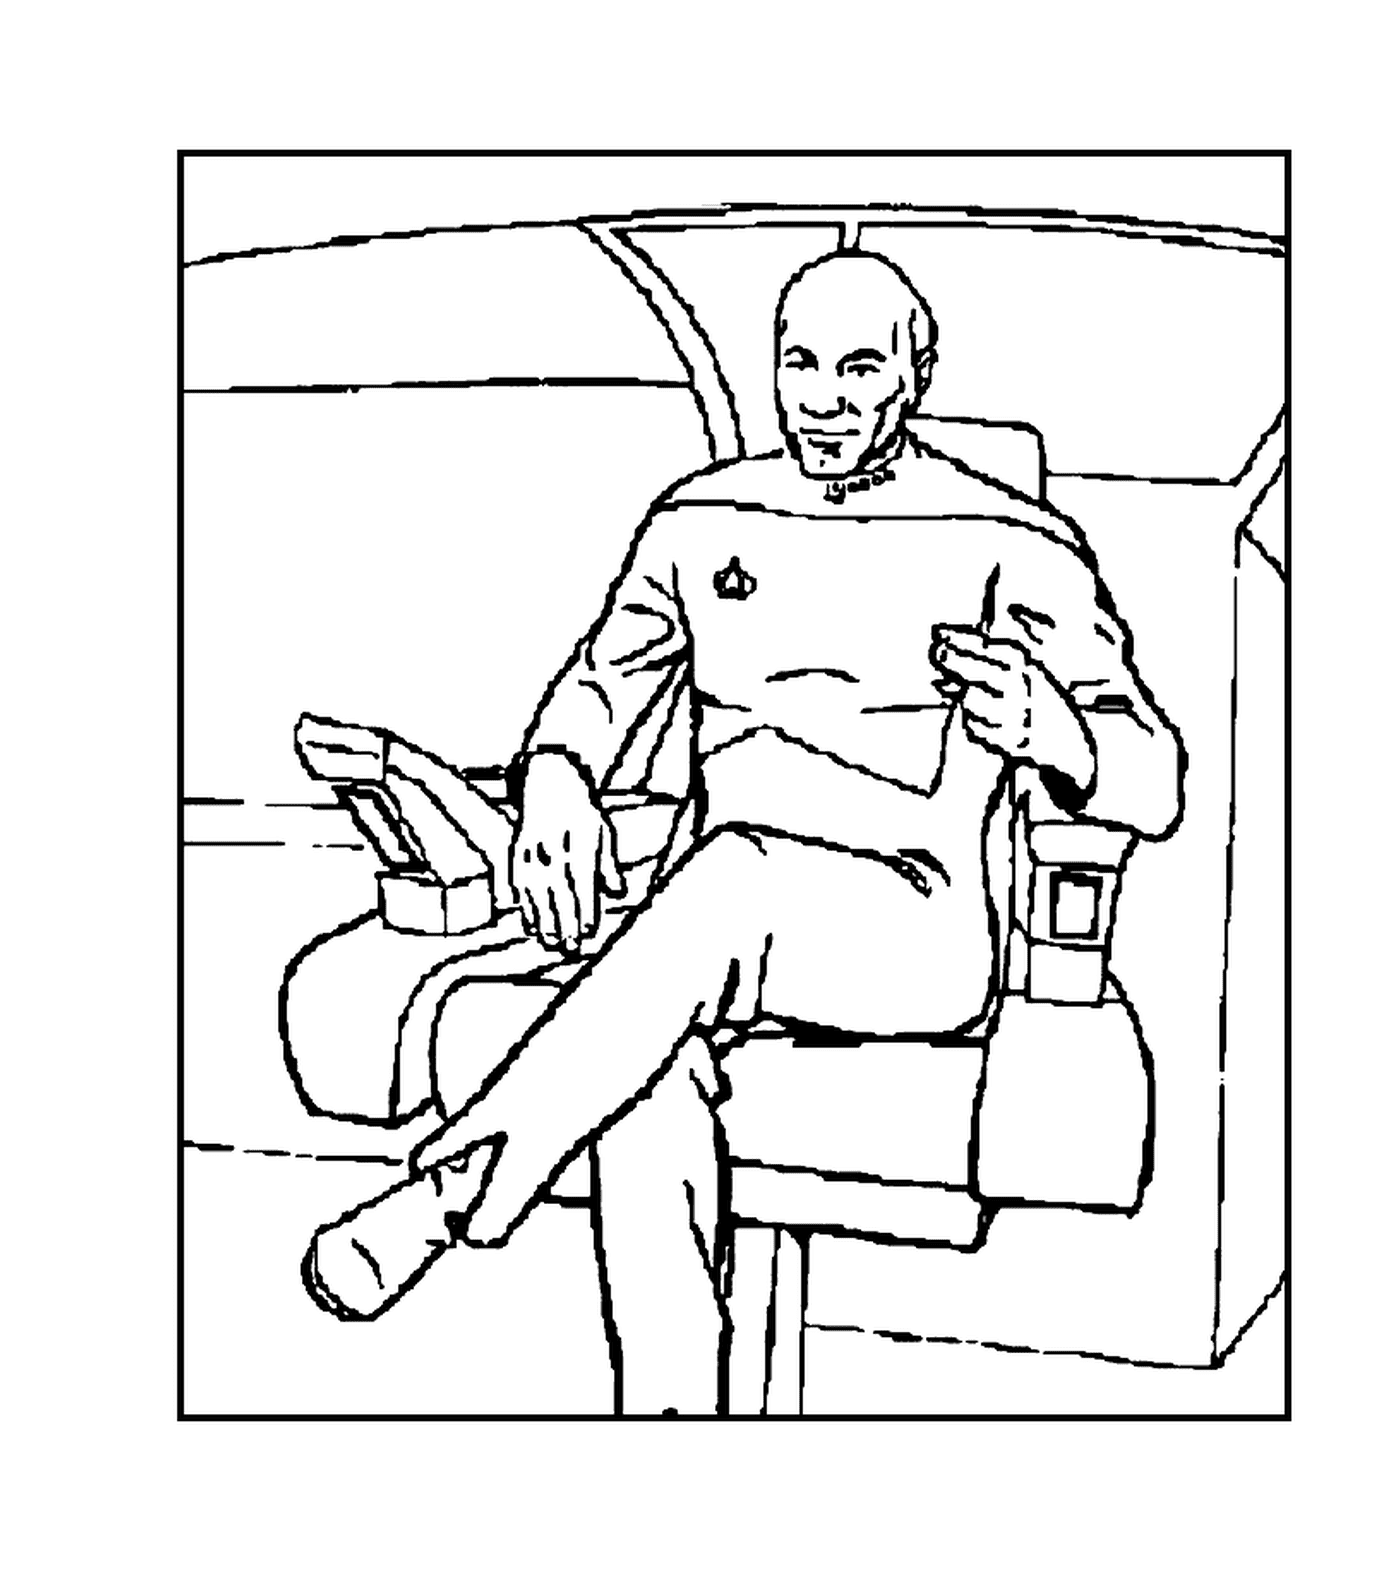  A Star Trek character in an armchair 